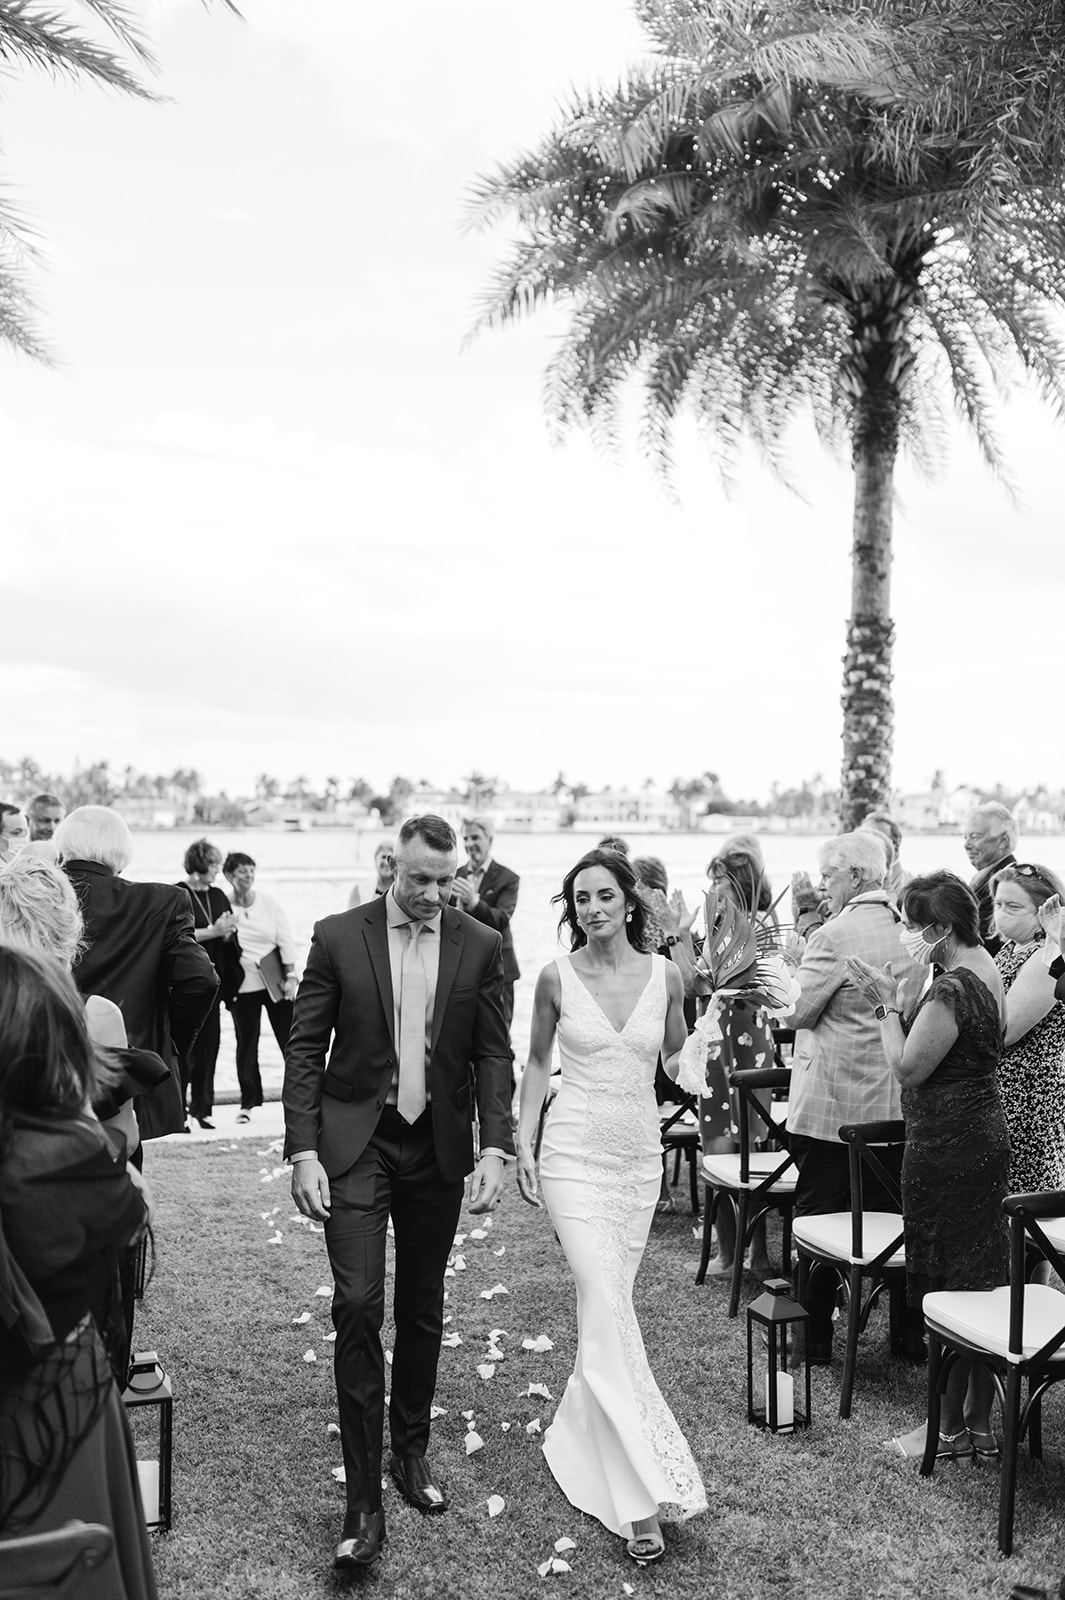 Naples FL wedding photographer captures the wedding favors
